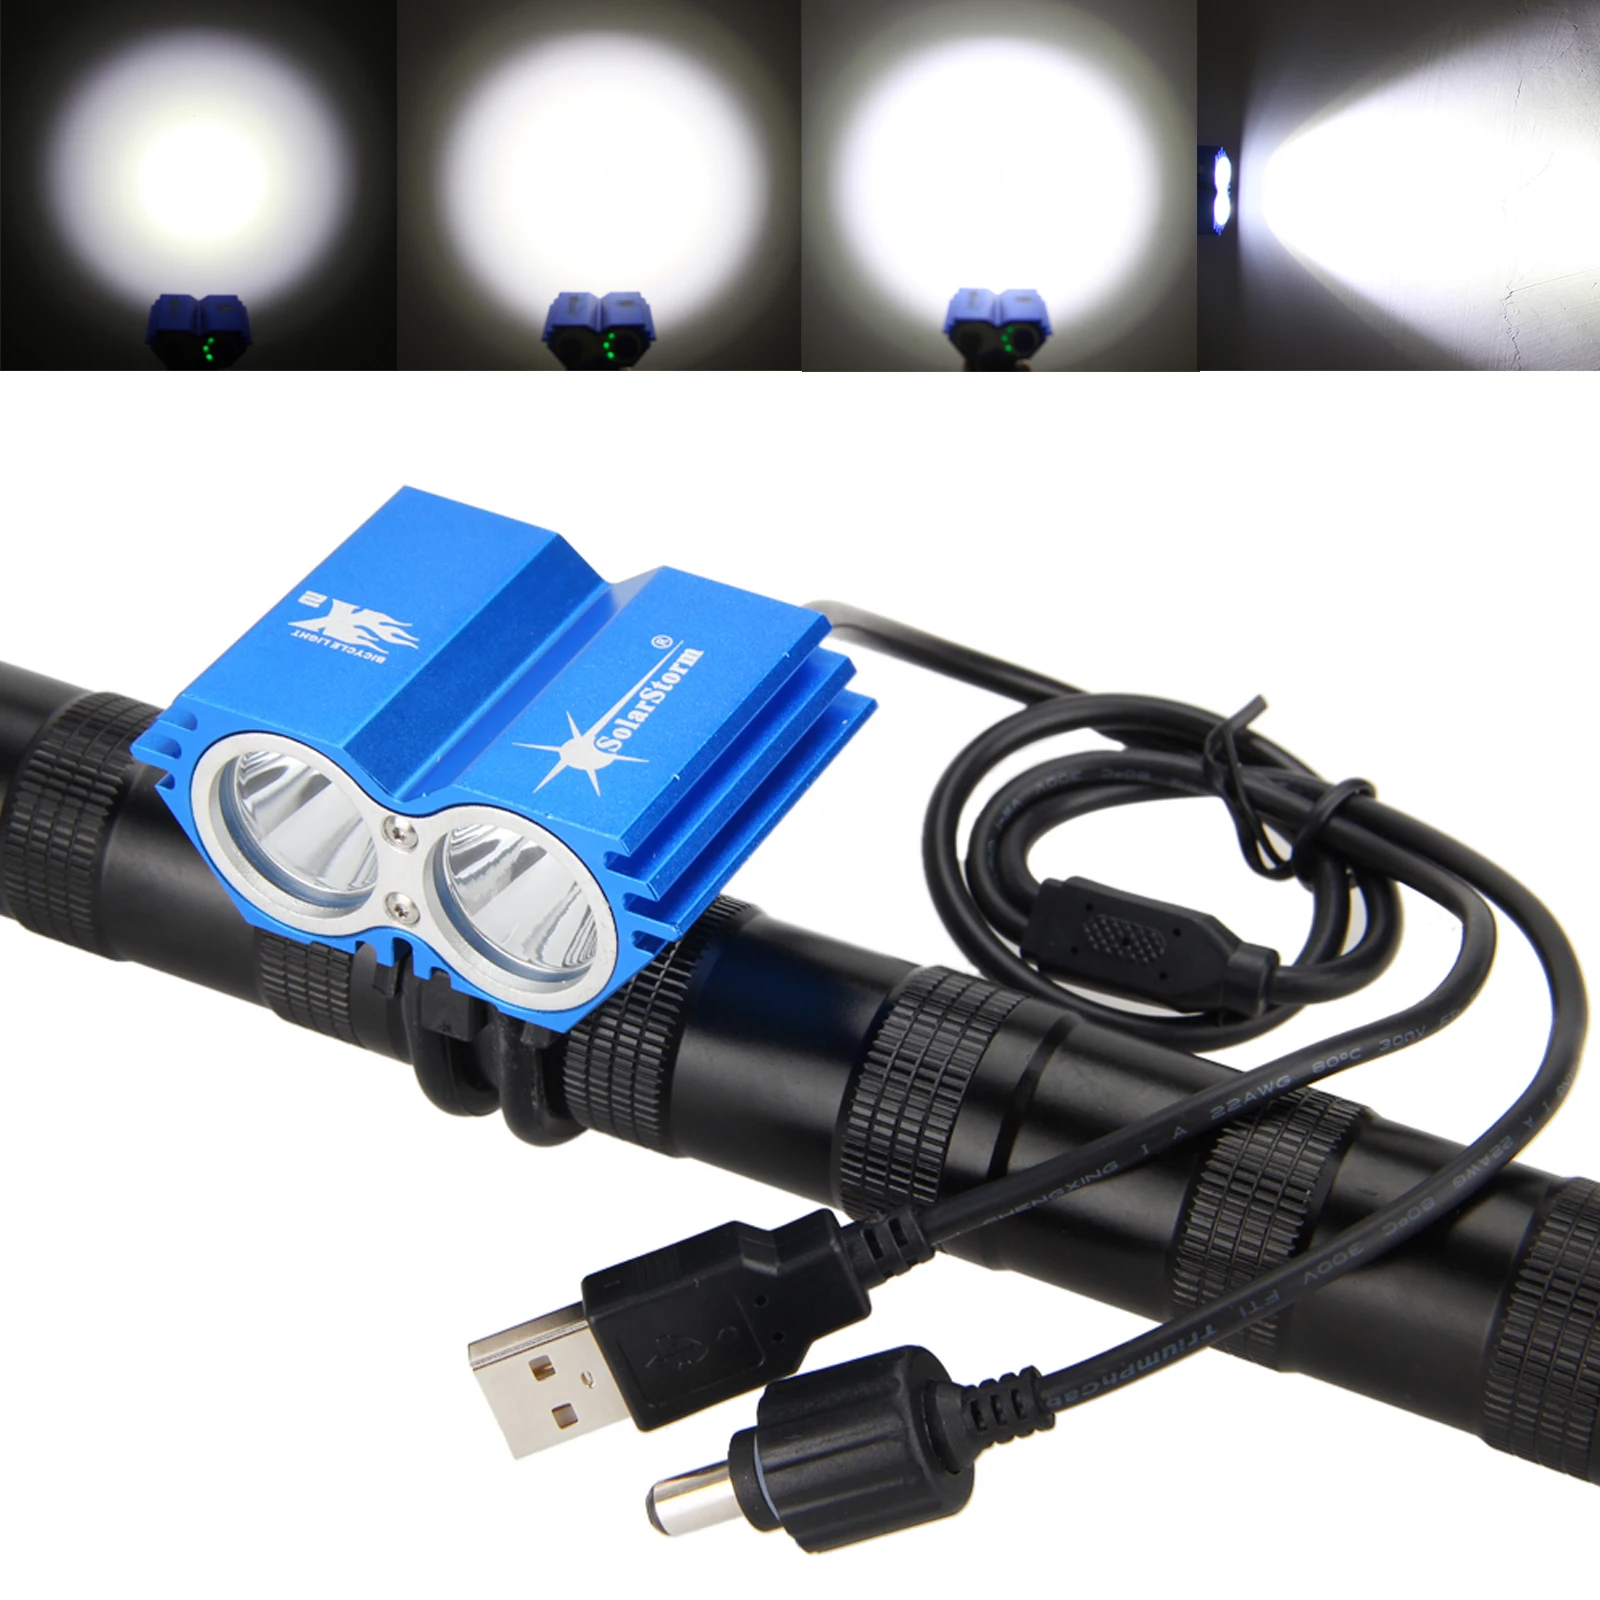 SolarStorm 1200 Lm 2 indikatorska lučka kroglice USB Kolesa, Led Luči Spredaj Krmilo kolesa lahka Baterija je treba kupiti ločeno